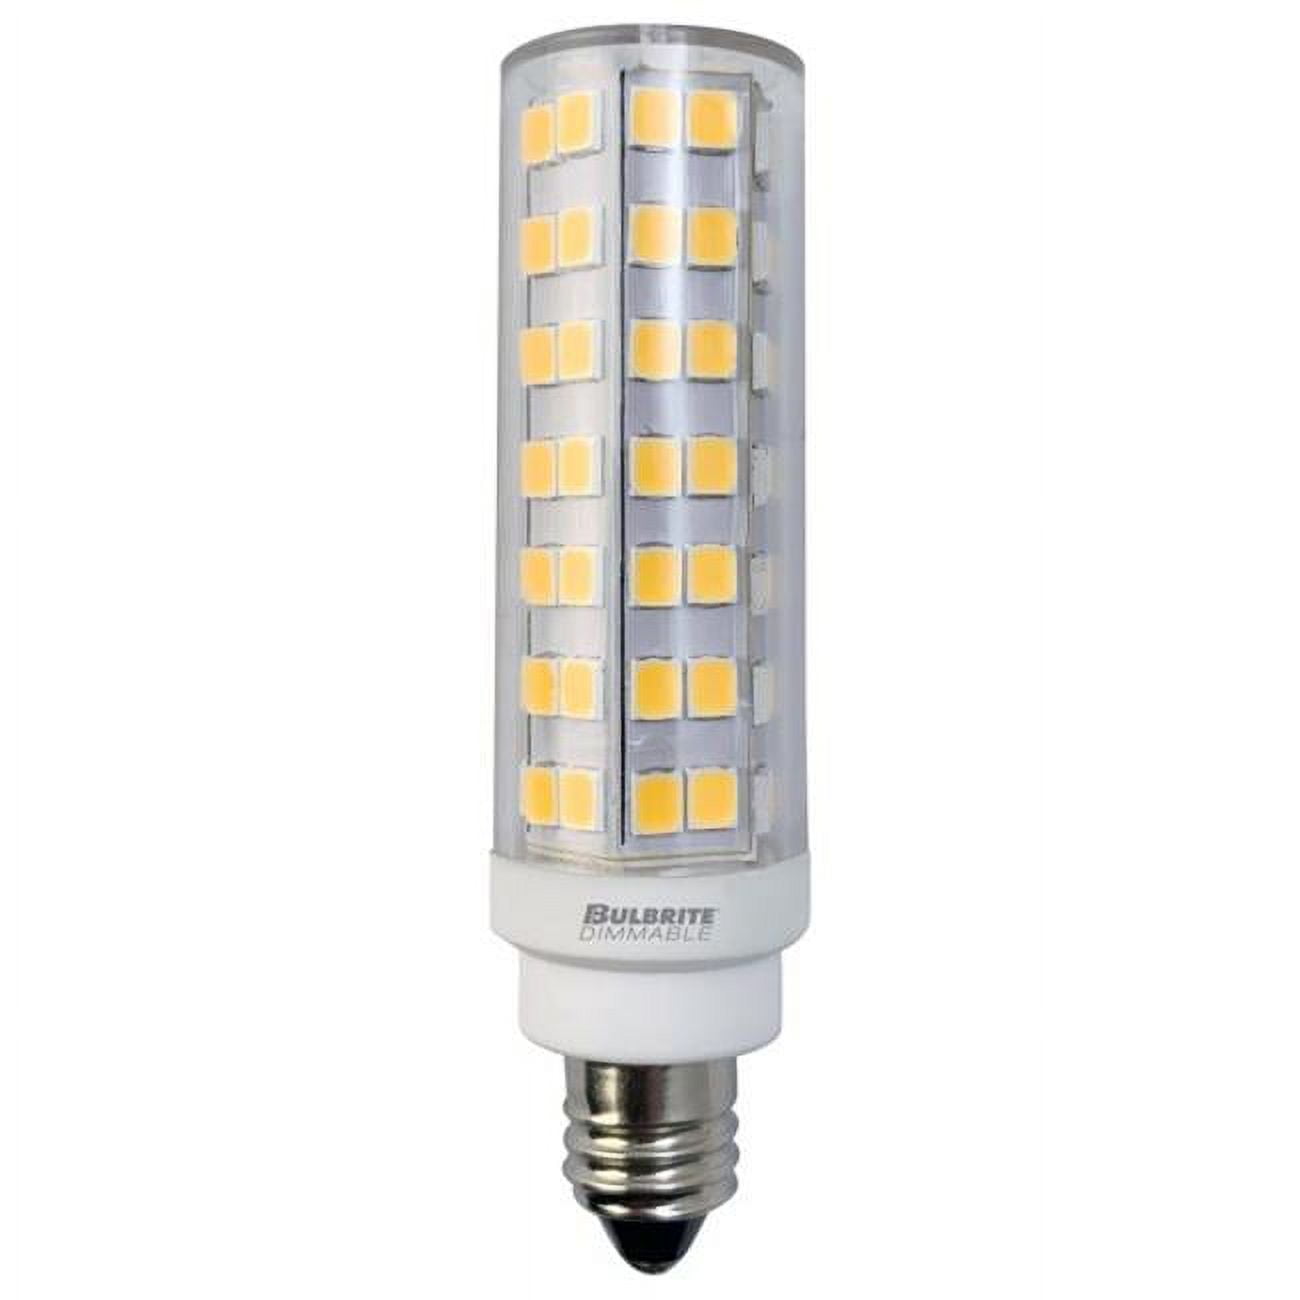 Picture of Bulbrite Pack of (2) 6.5 Watt 120V Dimmable Clear T6 LED Mini Light Bulbs with Candelabra (E12) Base  2700K Warm White Light  700 Lumens